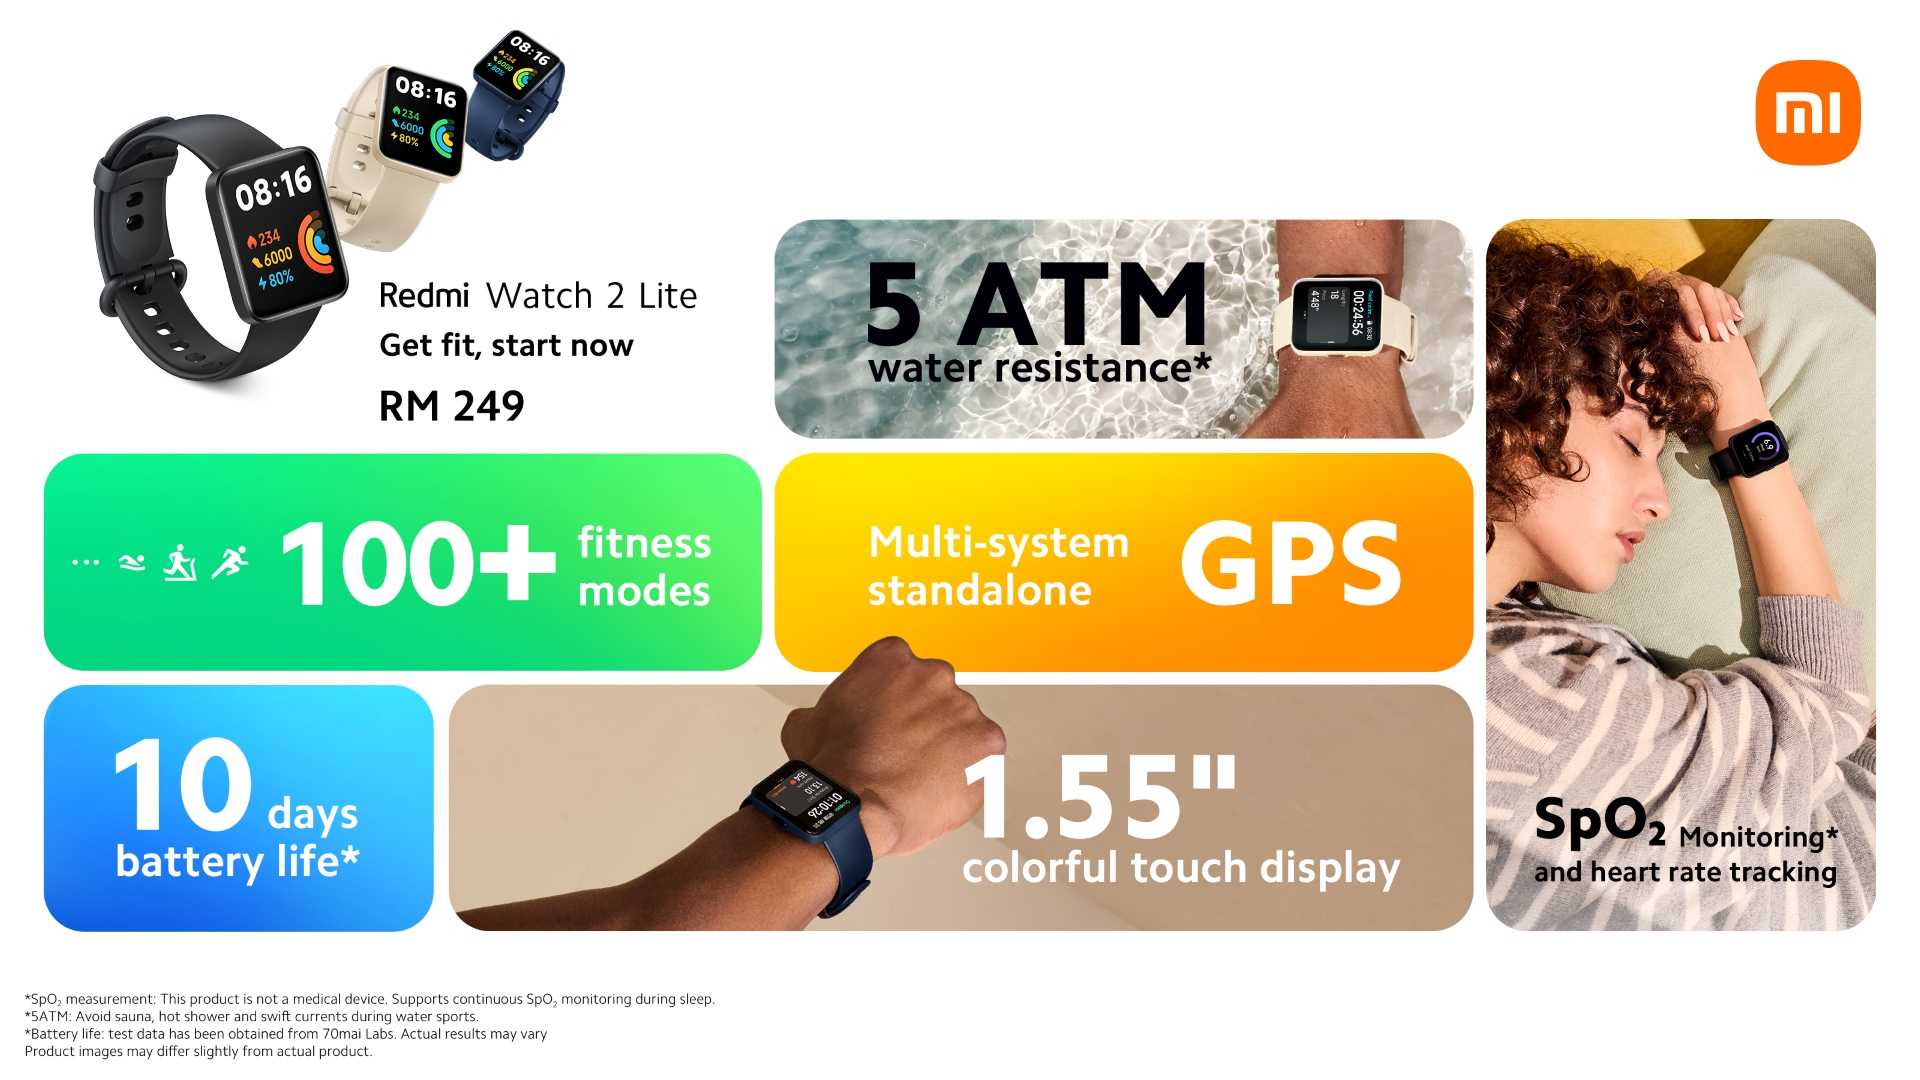  Xiaomi Redmi Watch 2 Lite, 1.55 Colorful Touch